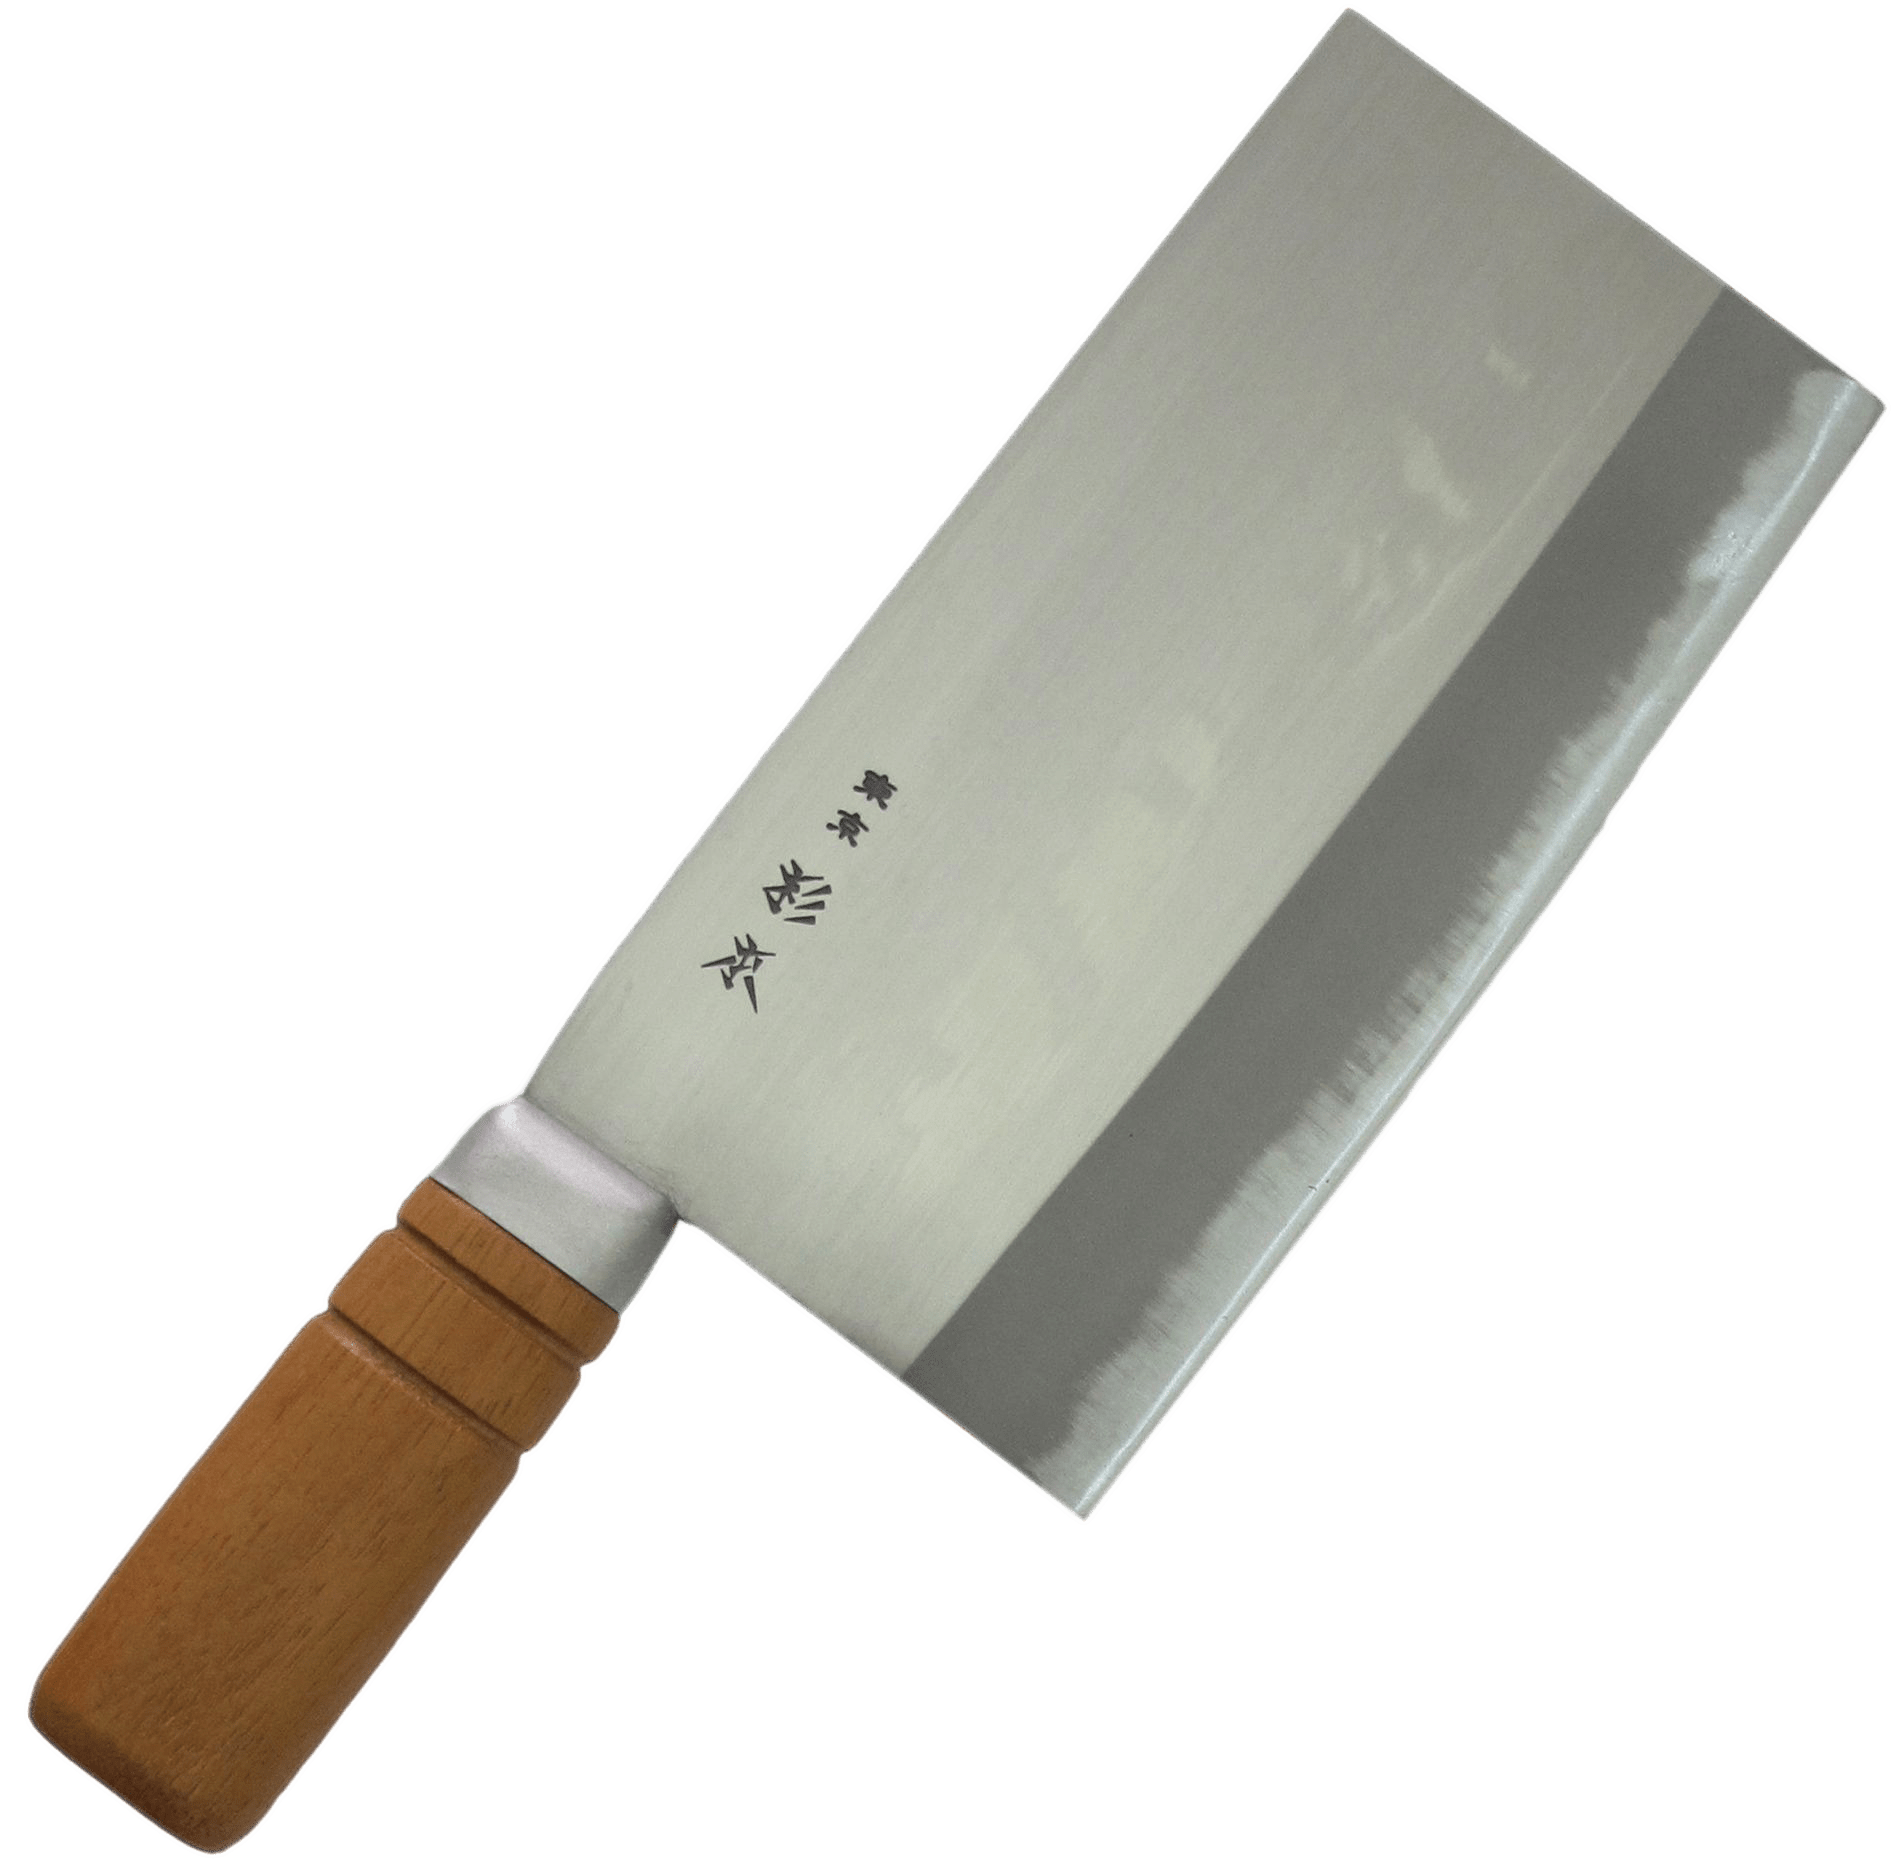 Vector Knife Kitchen Free Download Image PNG Image